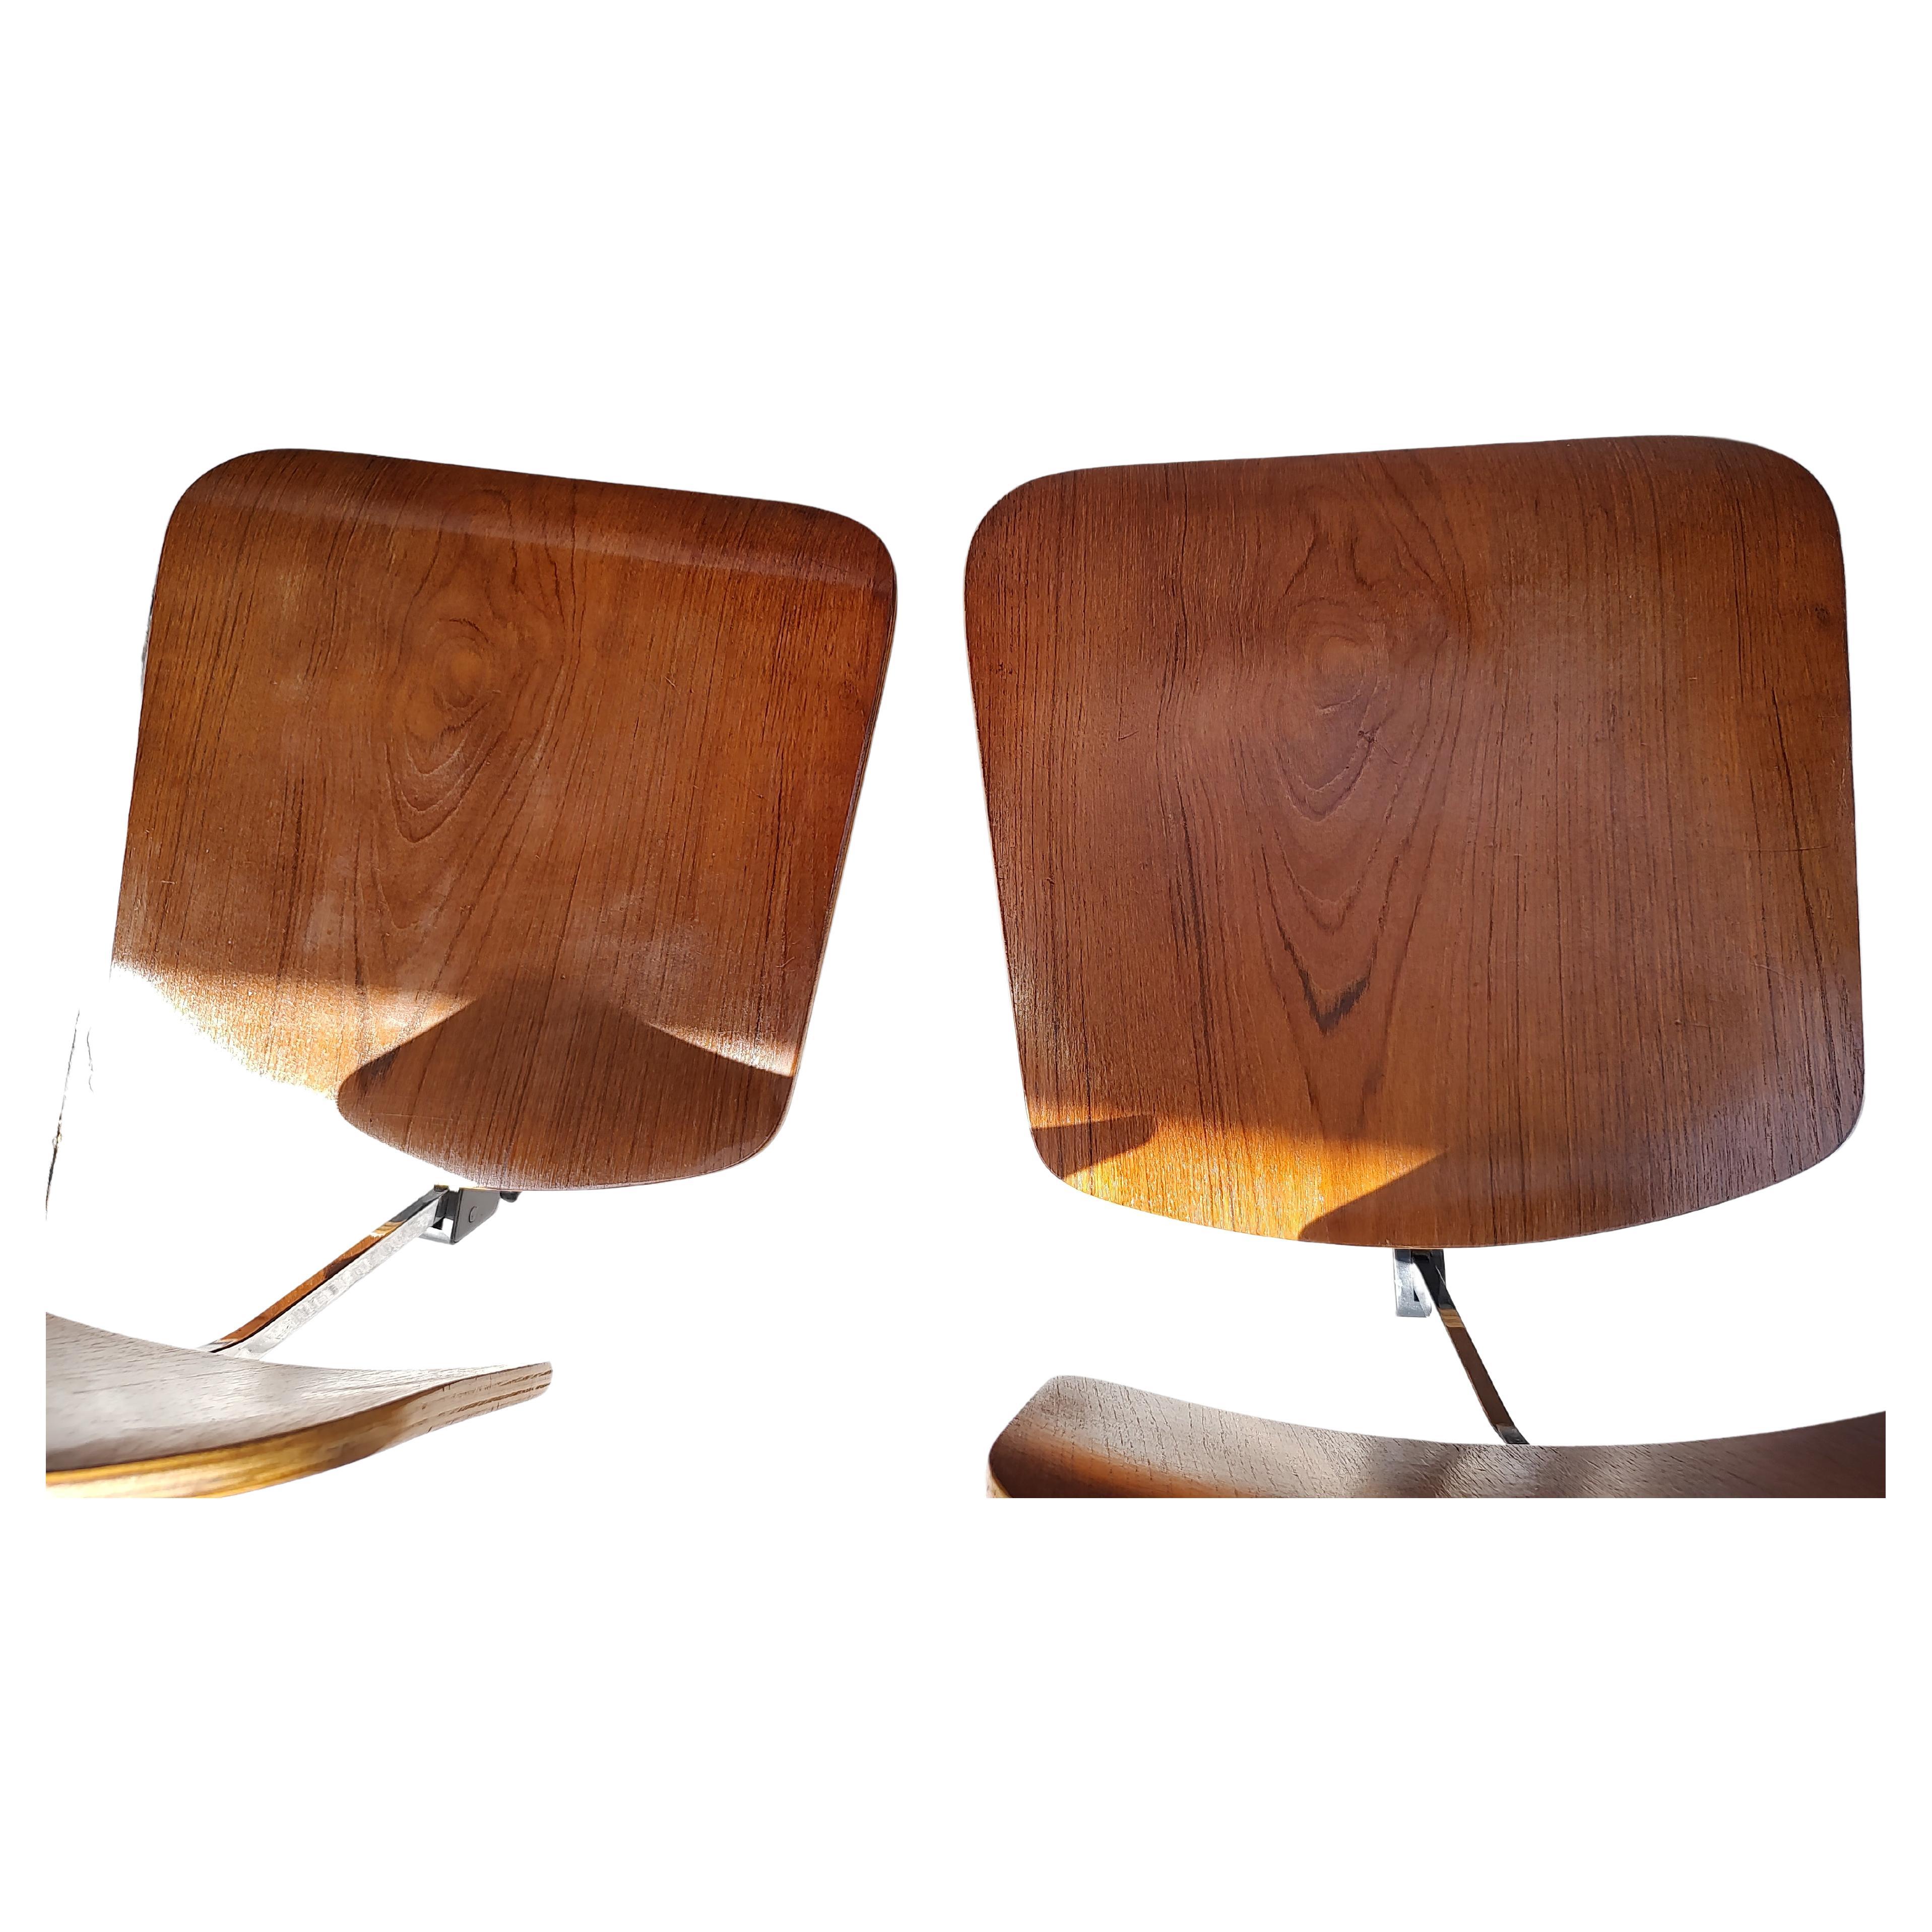 Scandinavian Modern Mid-Century Modern Adjustable Desk Dining Chairs by Jorgen Rasmussen for Labofa For Sale